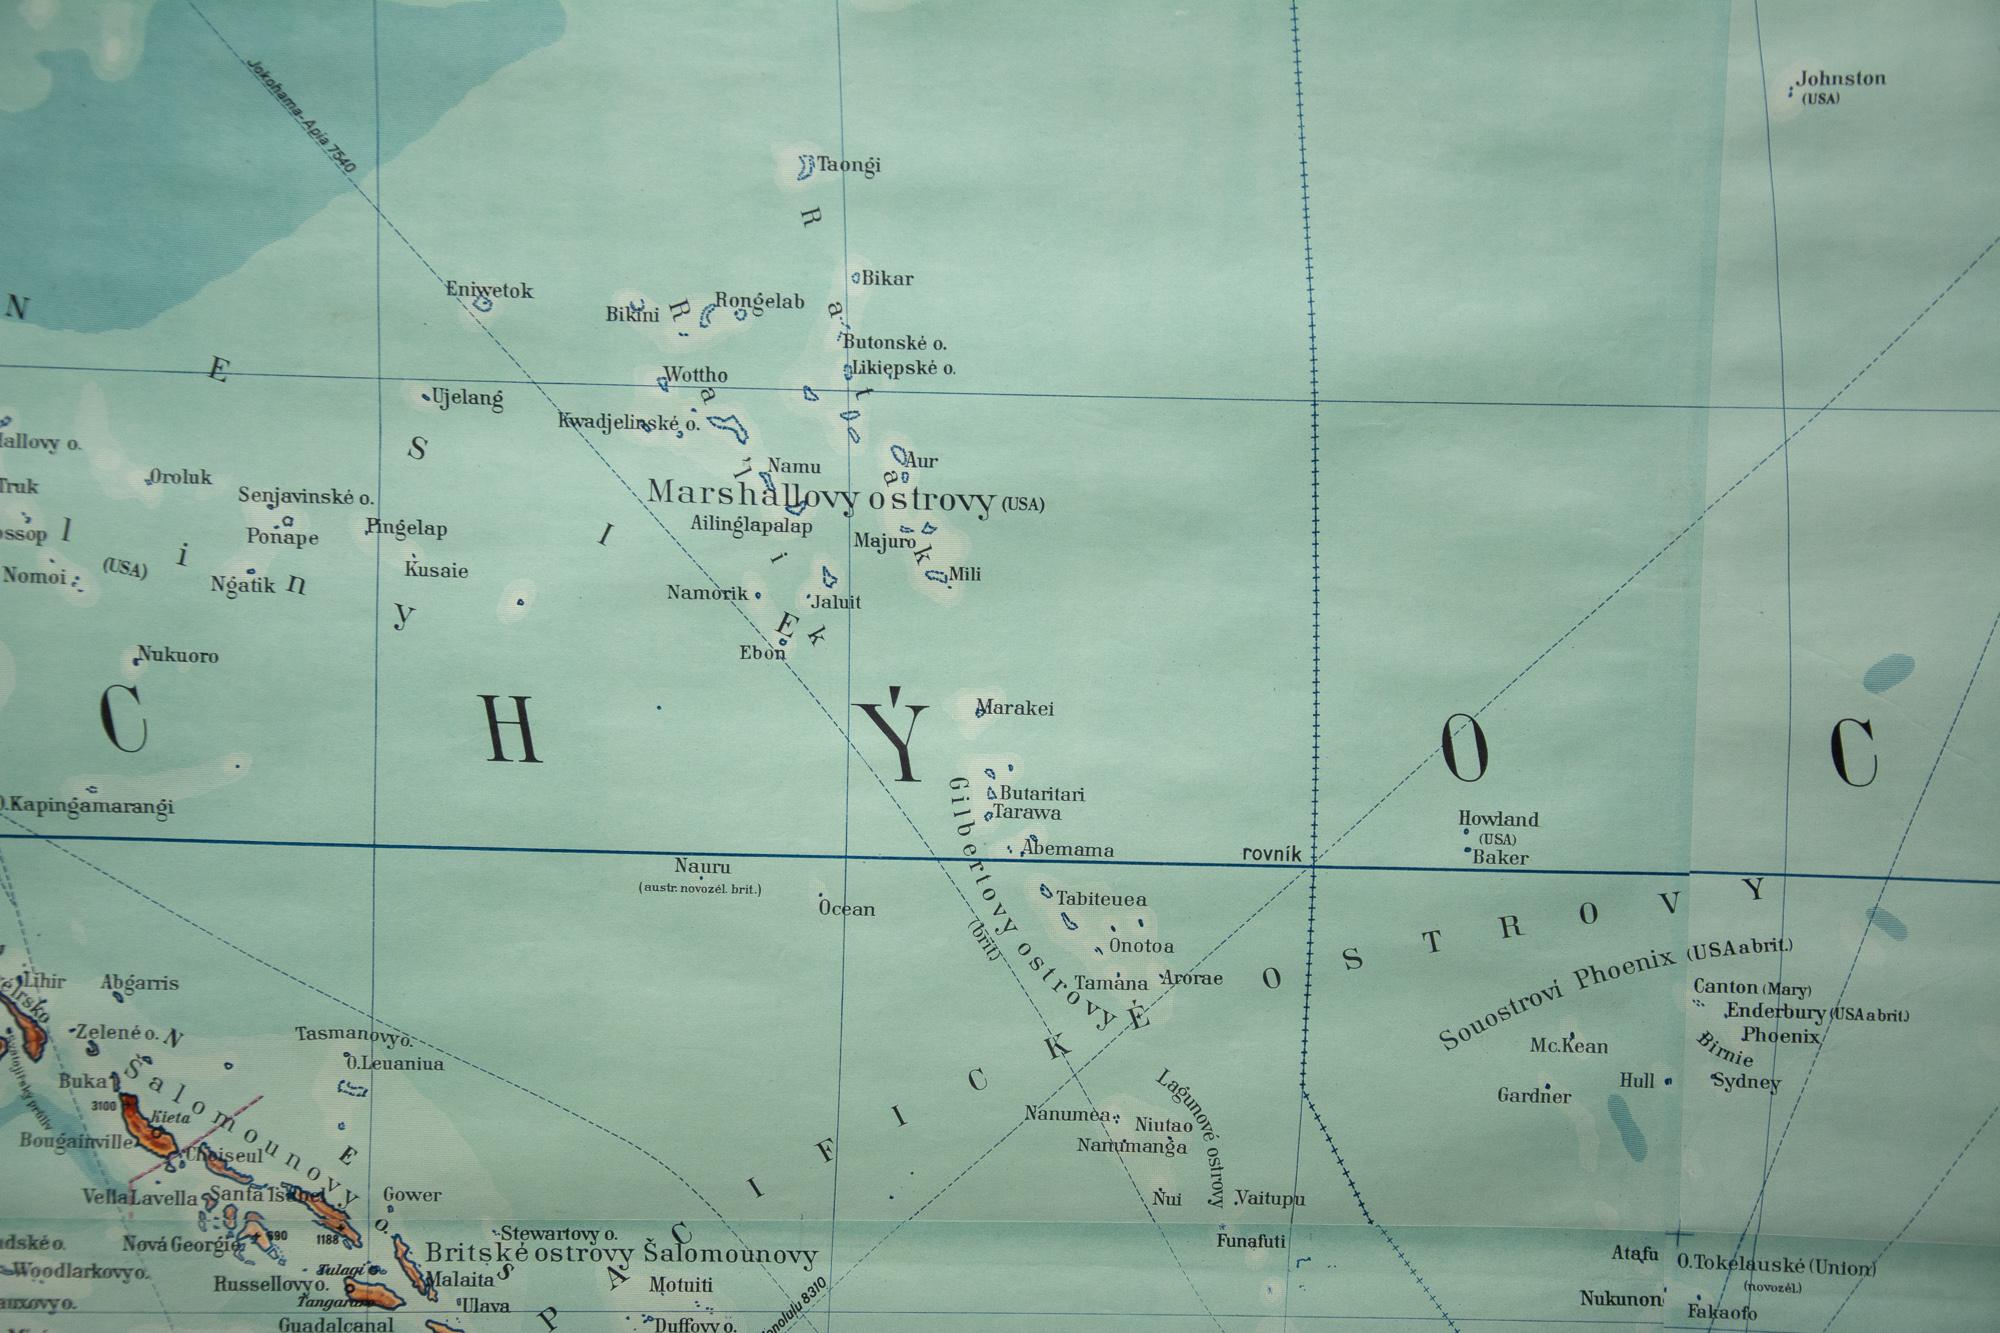 Czechoslovak Vintage School Maps of Australia and Oceania, 1955 2